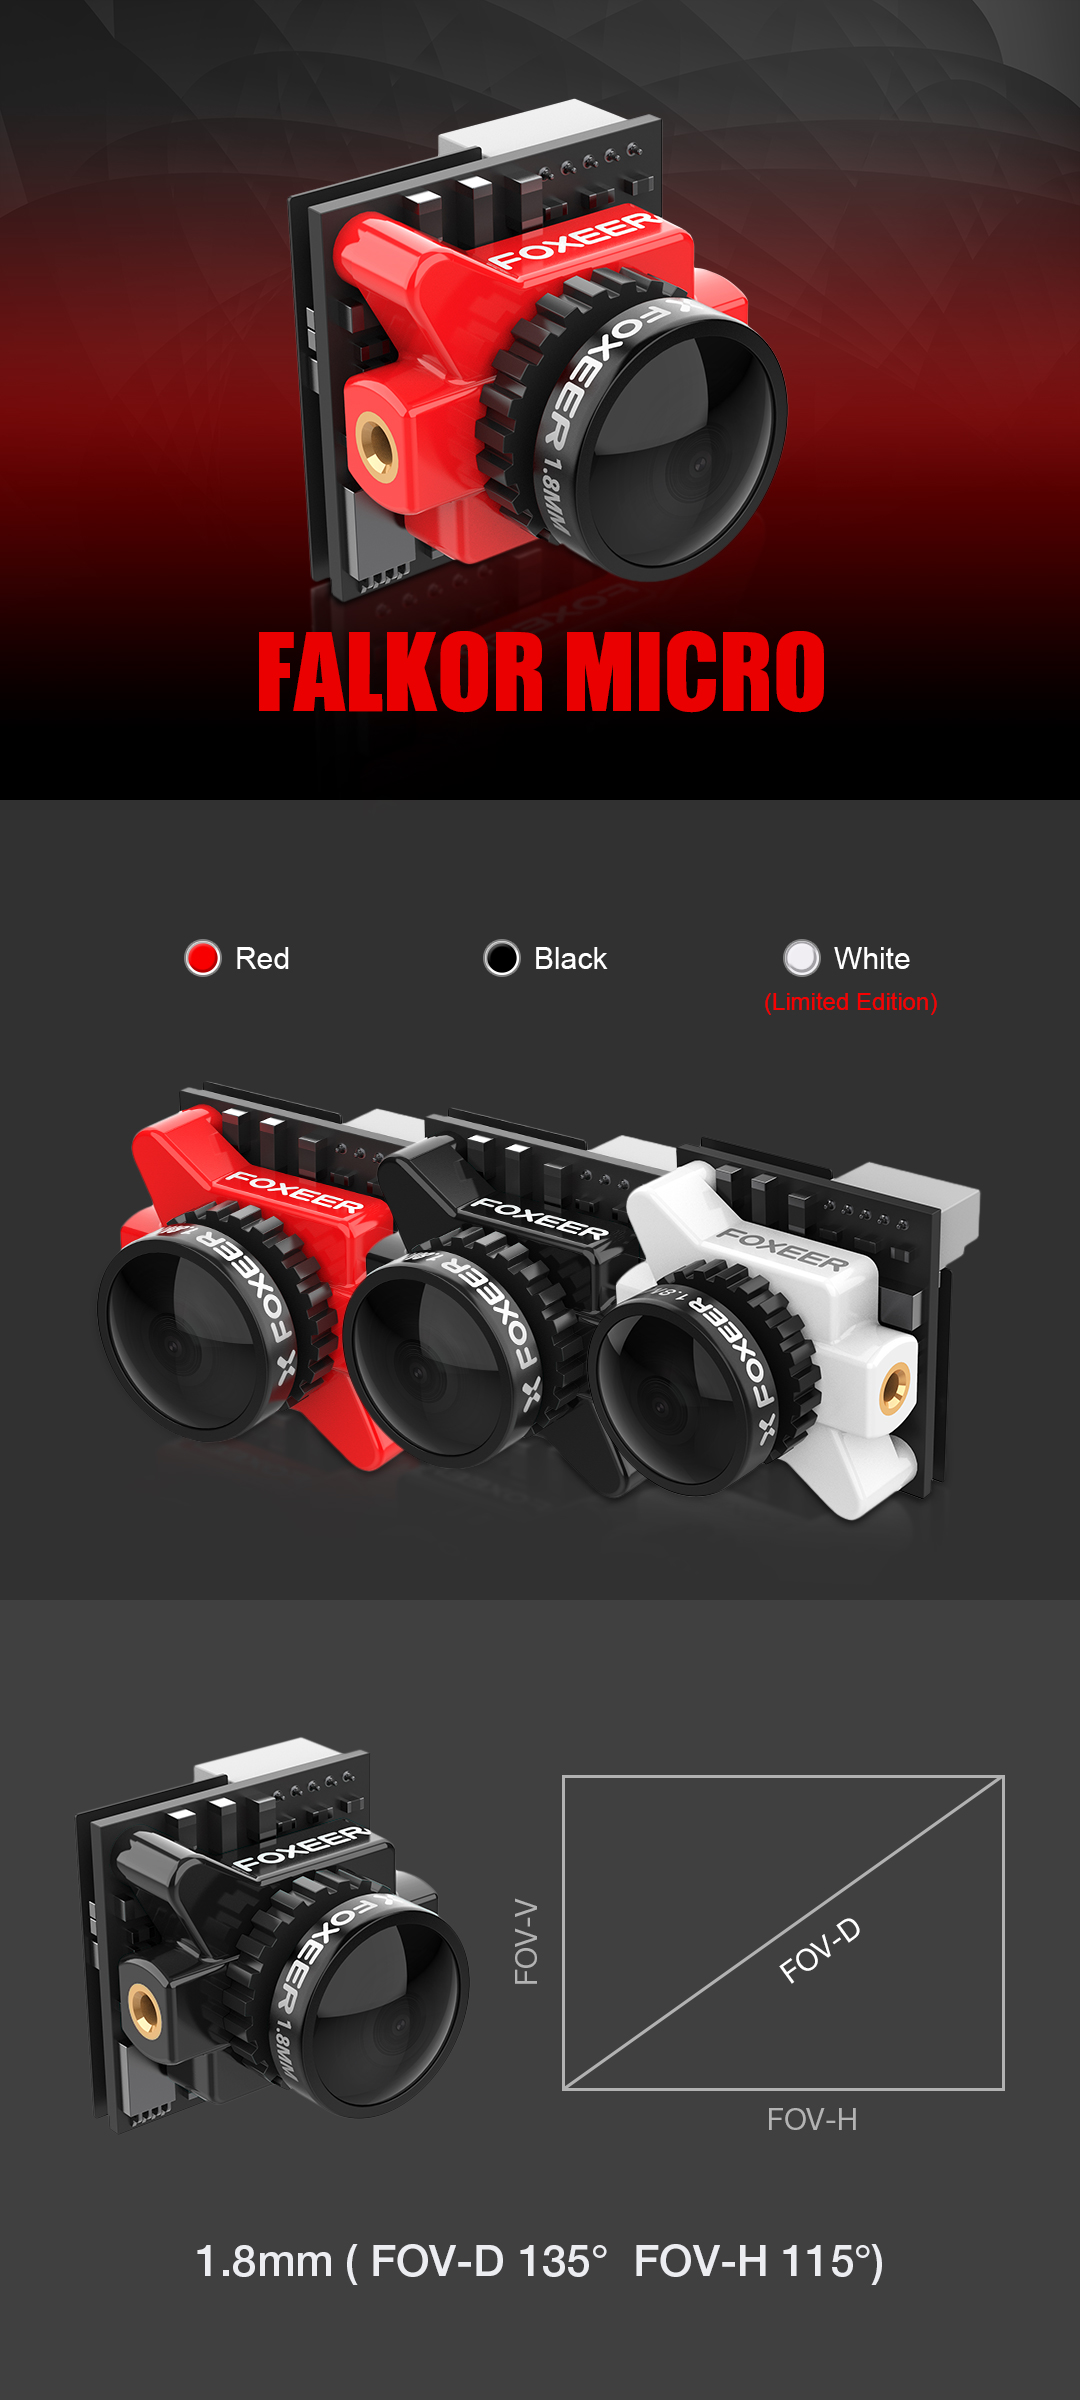 Foxeer Micro Falkor 1200TVL Camera (Pick Your Color) 2 - Foxeer